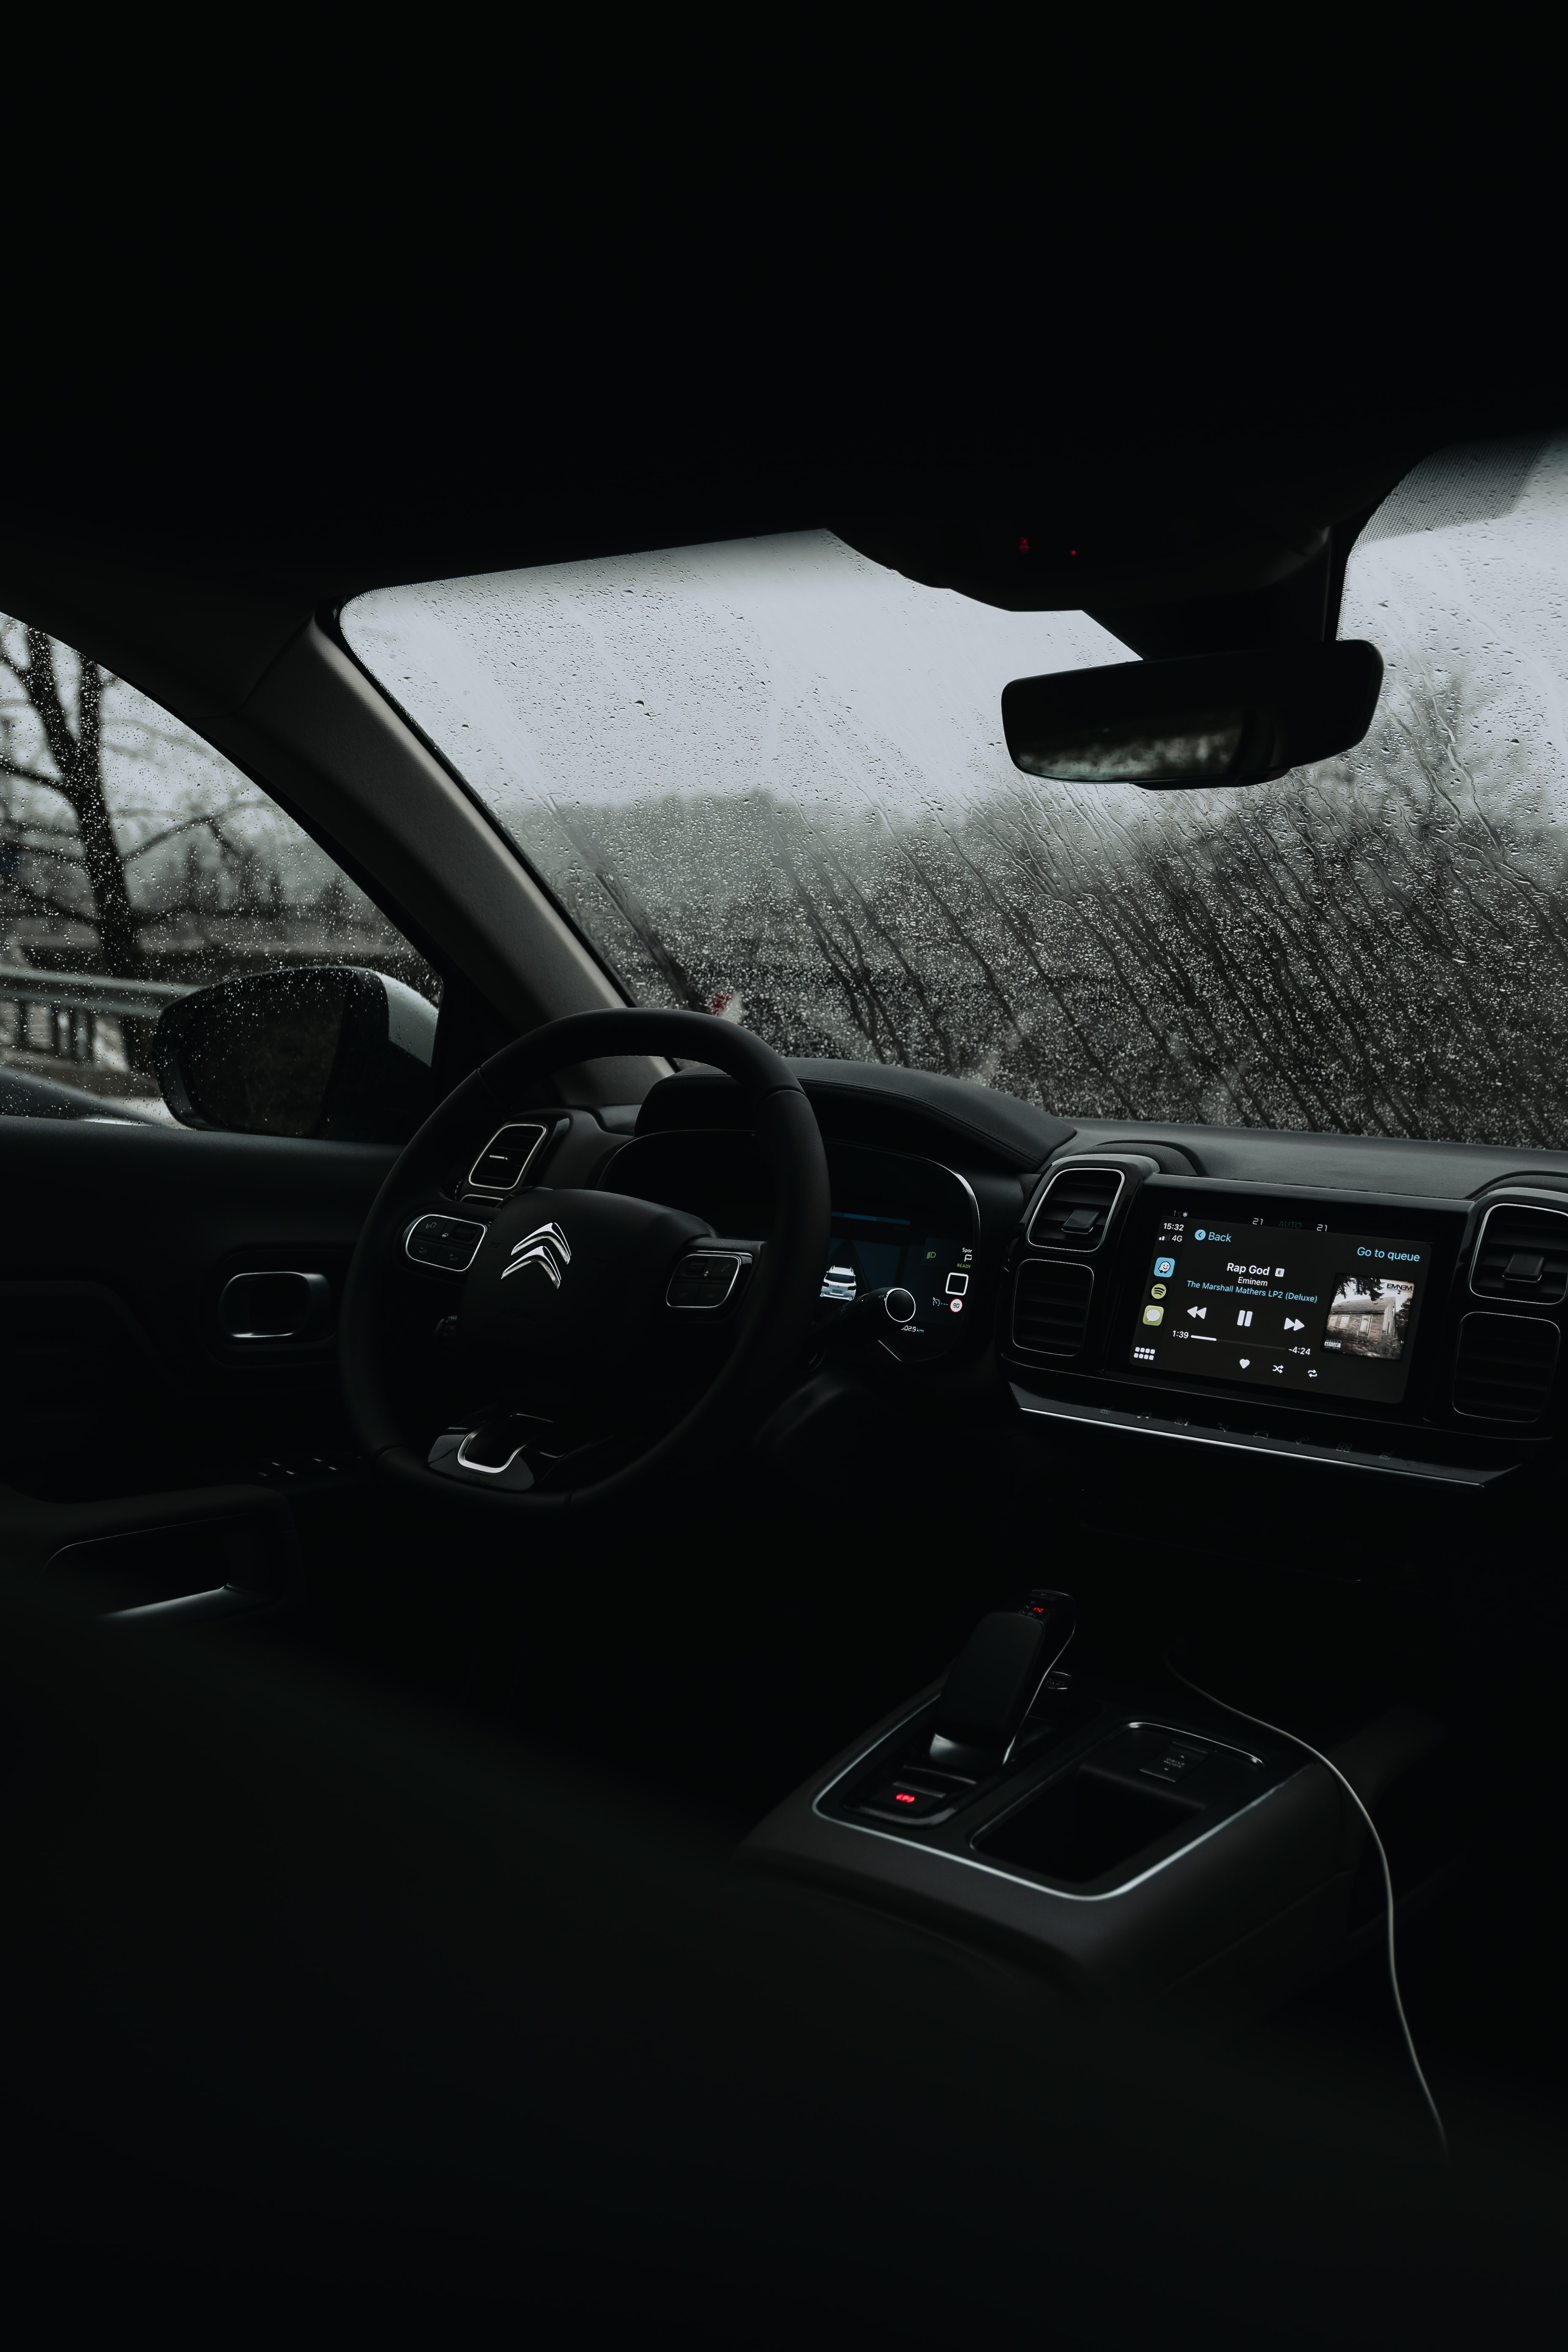 steering wheel, rudder, control panel, salon, citroen, cars, black, car